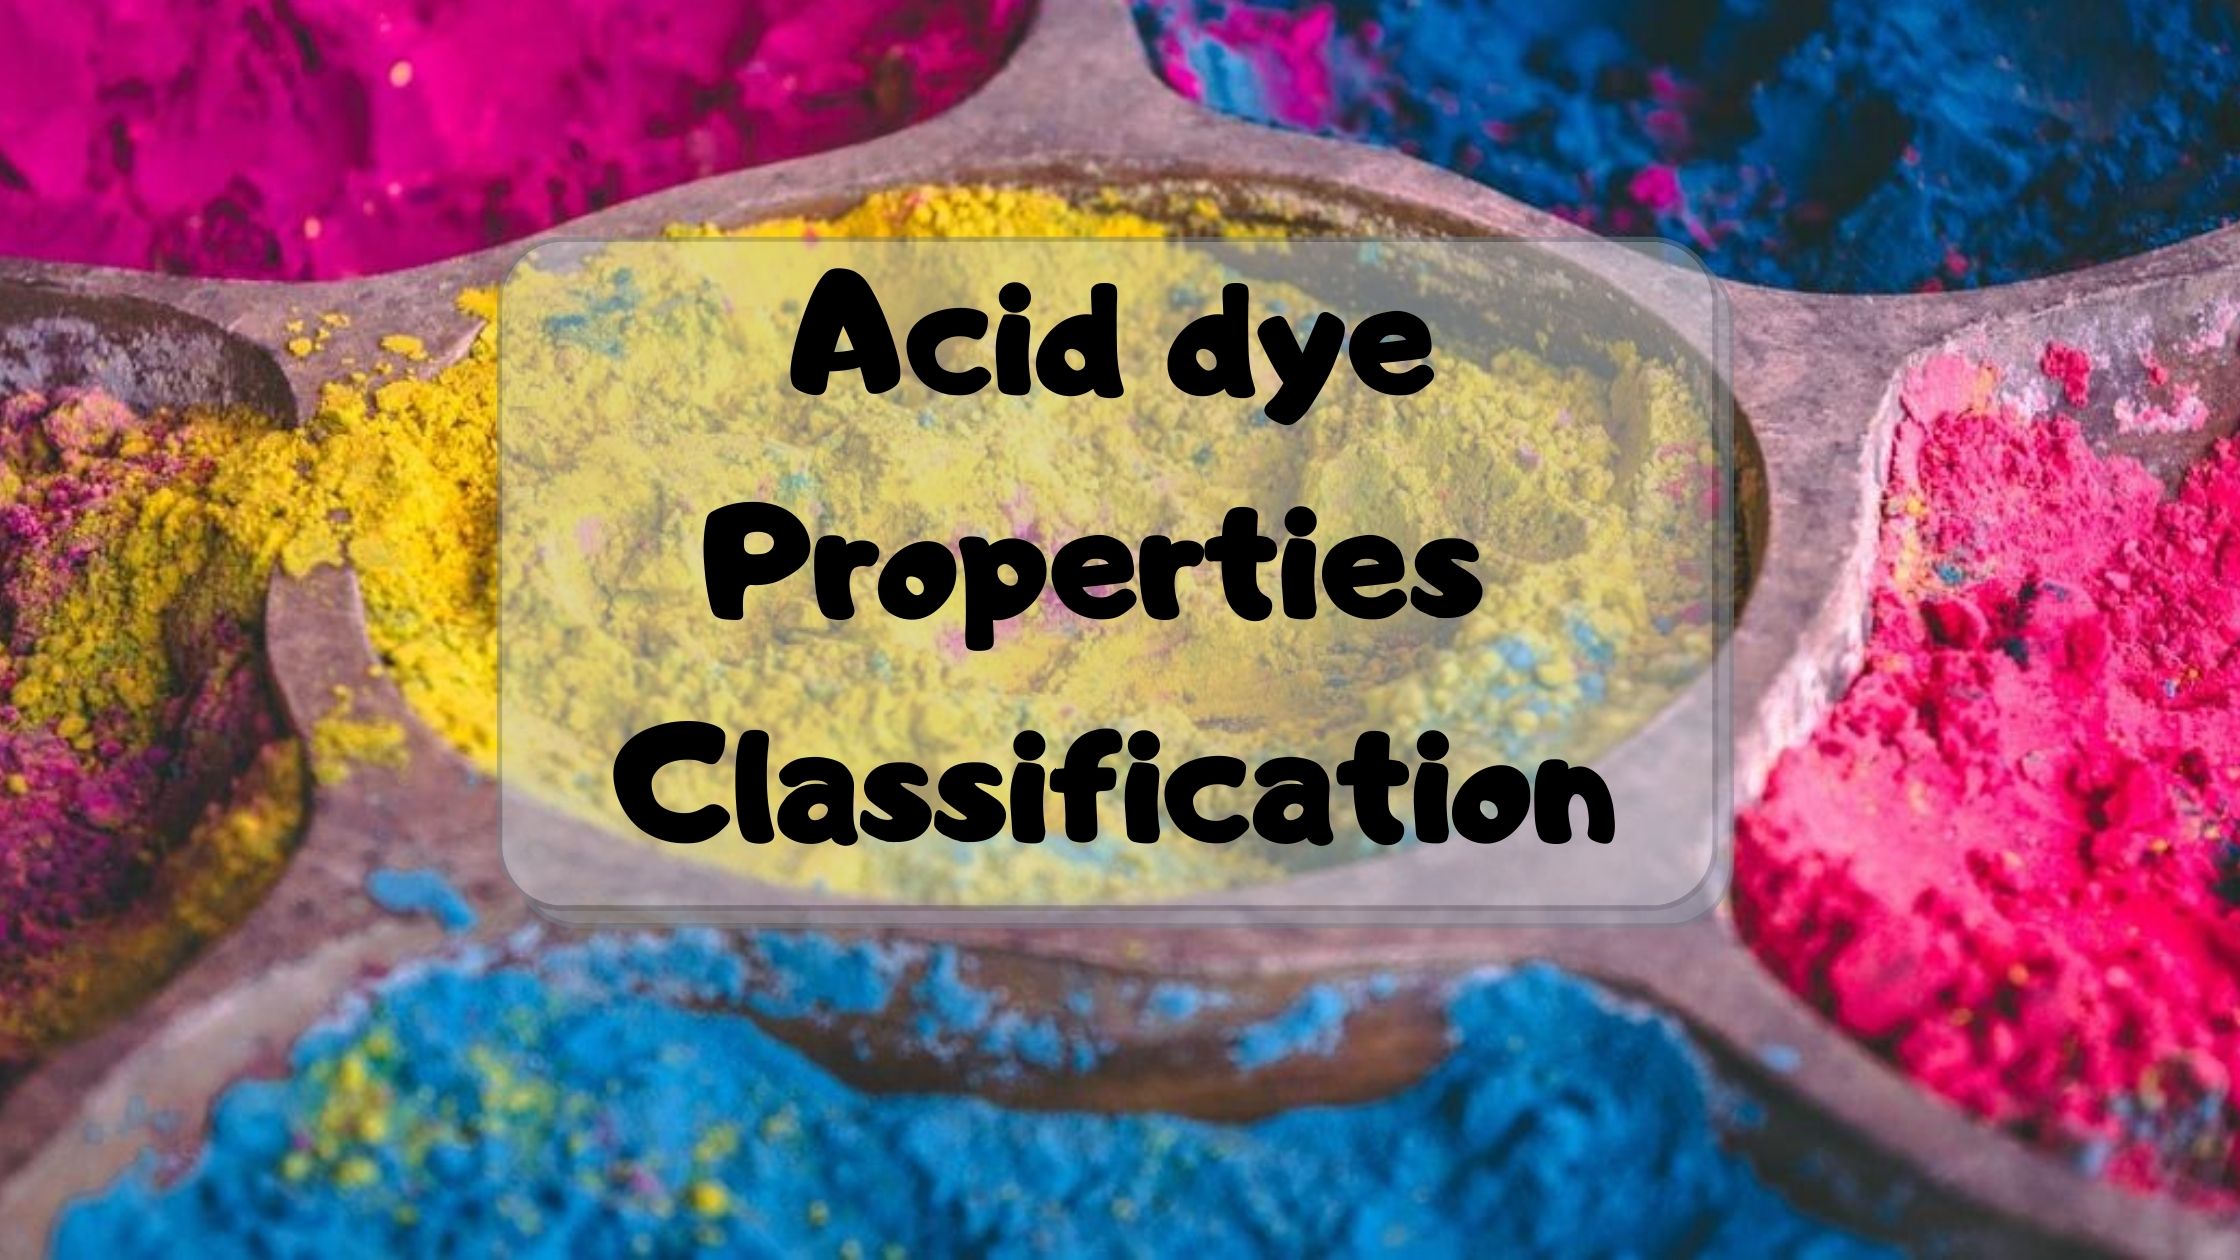 Acid dye| Properties - Classification of Acid dyes.